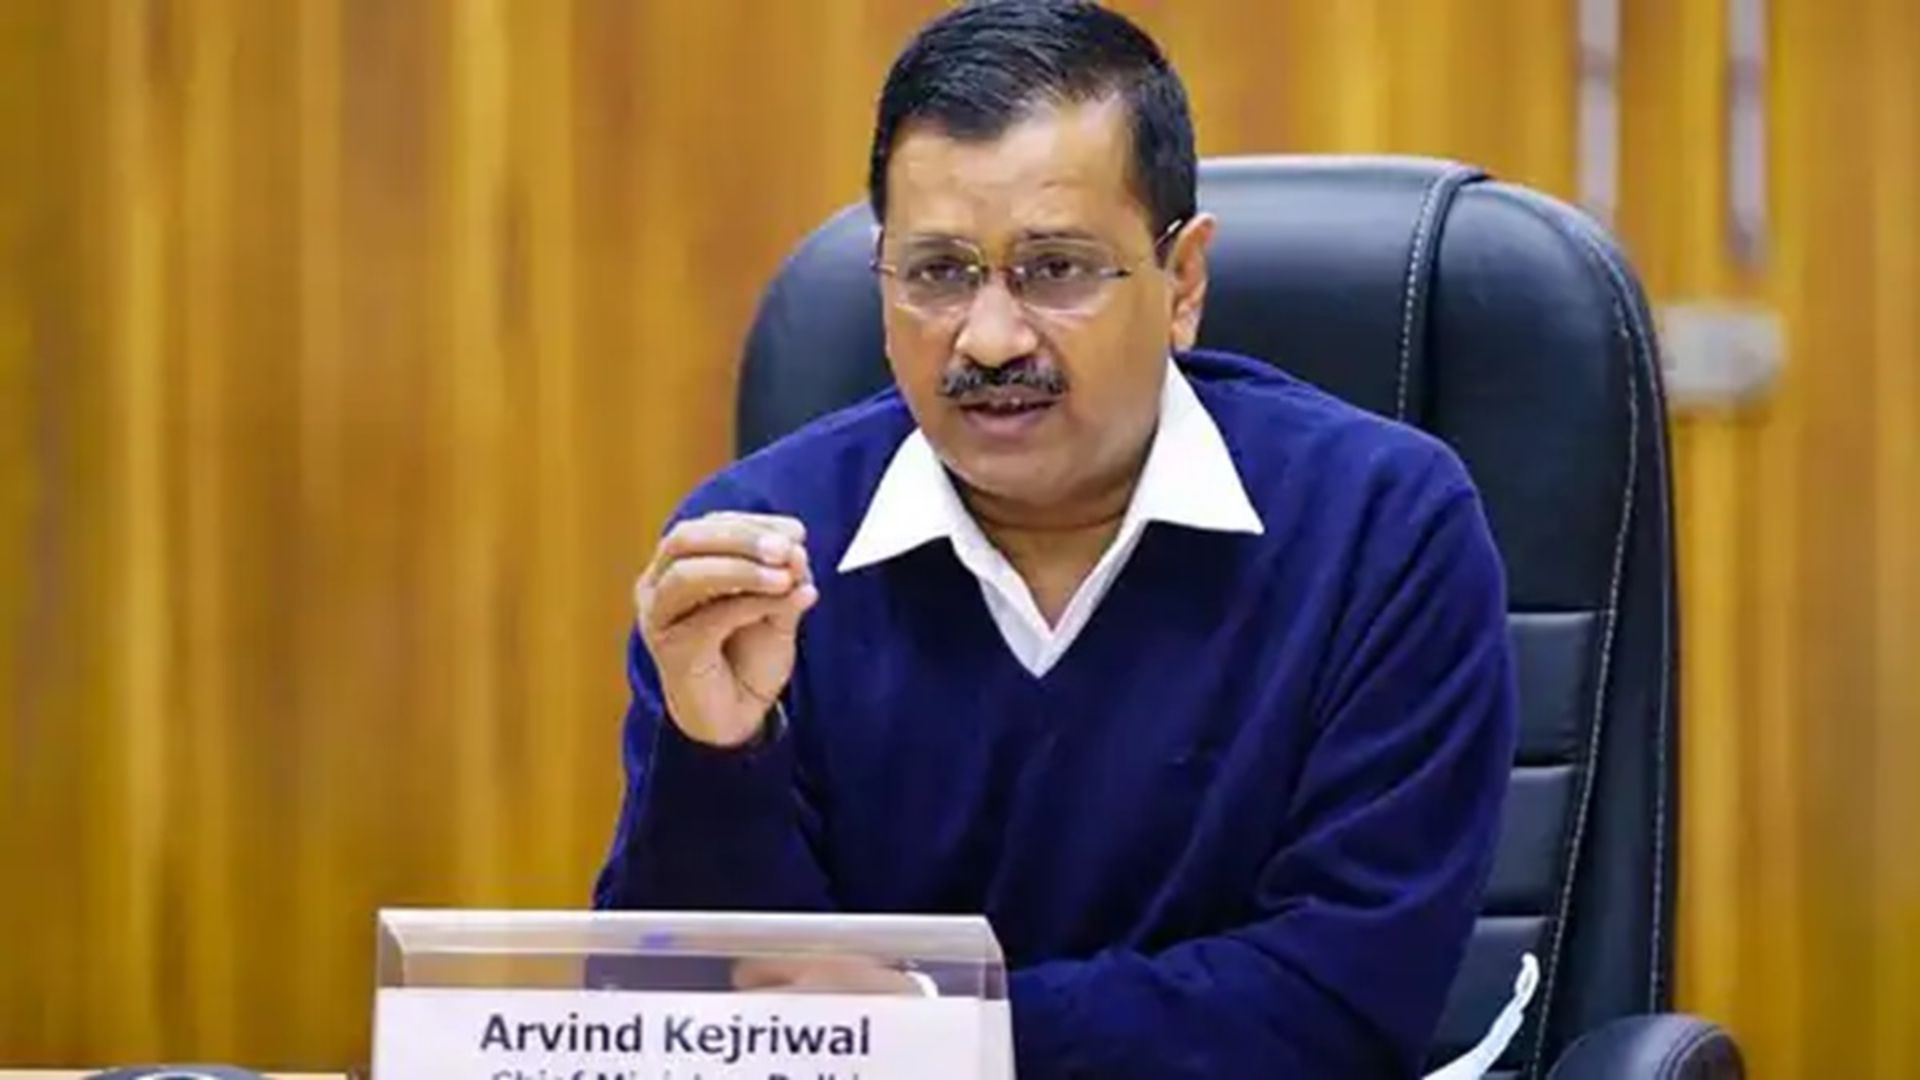 Delhi CM Arvind Kejriwal to skip ED summons again, calls notice as “illegal”